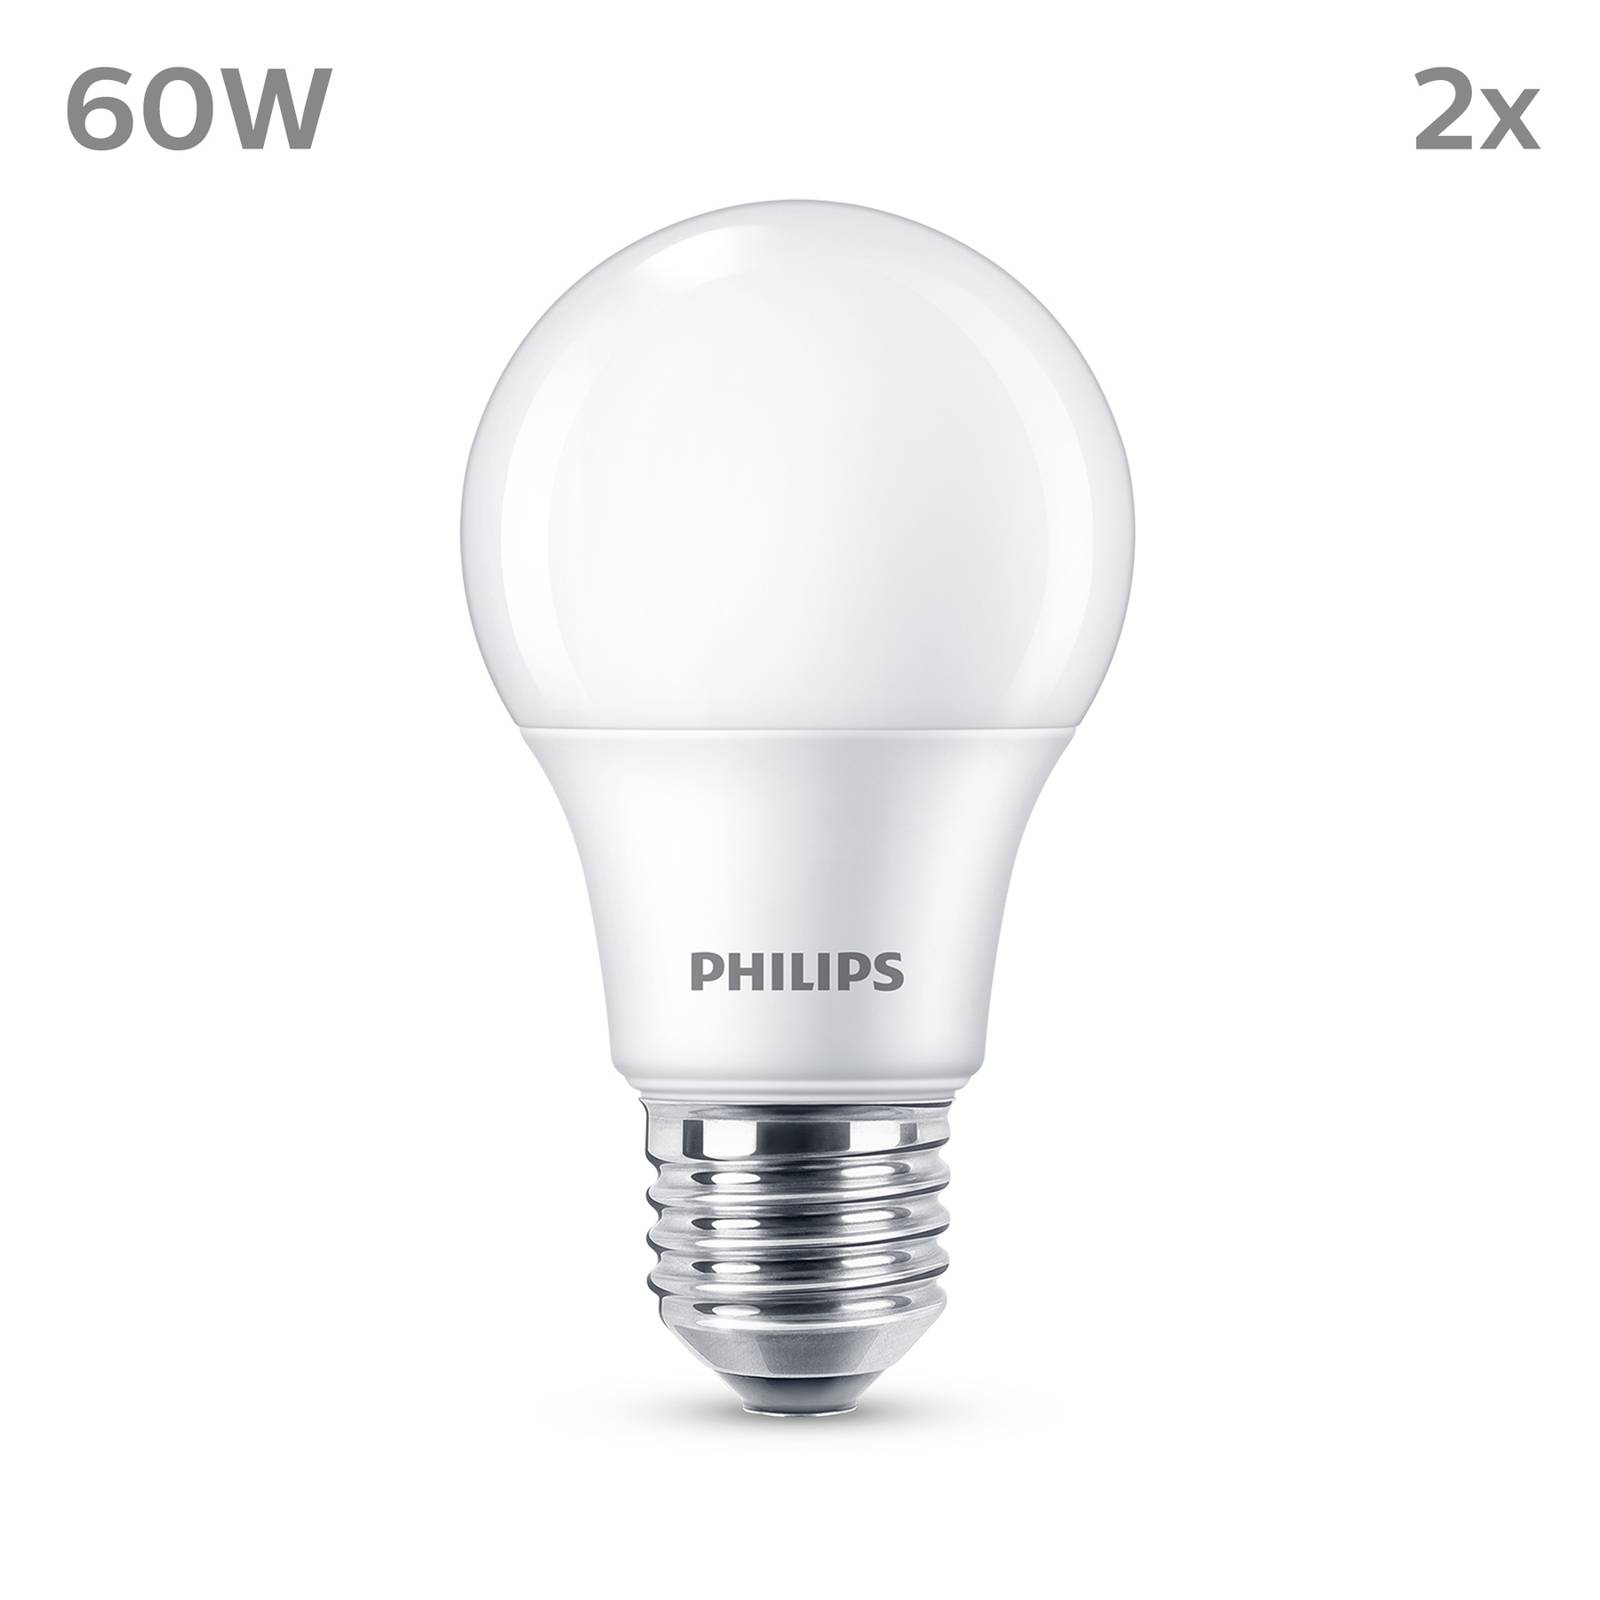 Philips Philips LED žárovka E27 8W 806lm 2700K matná 2ks